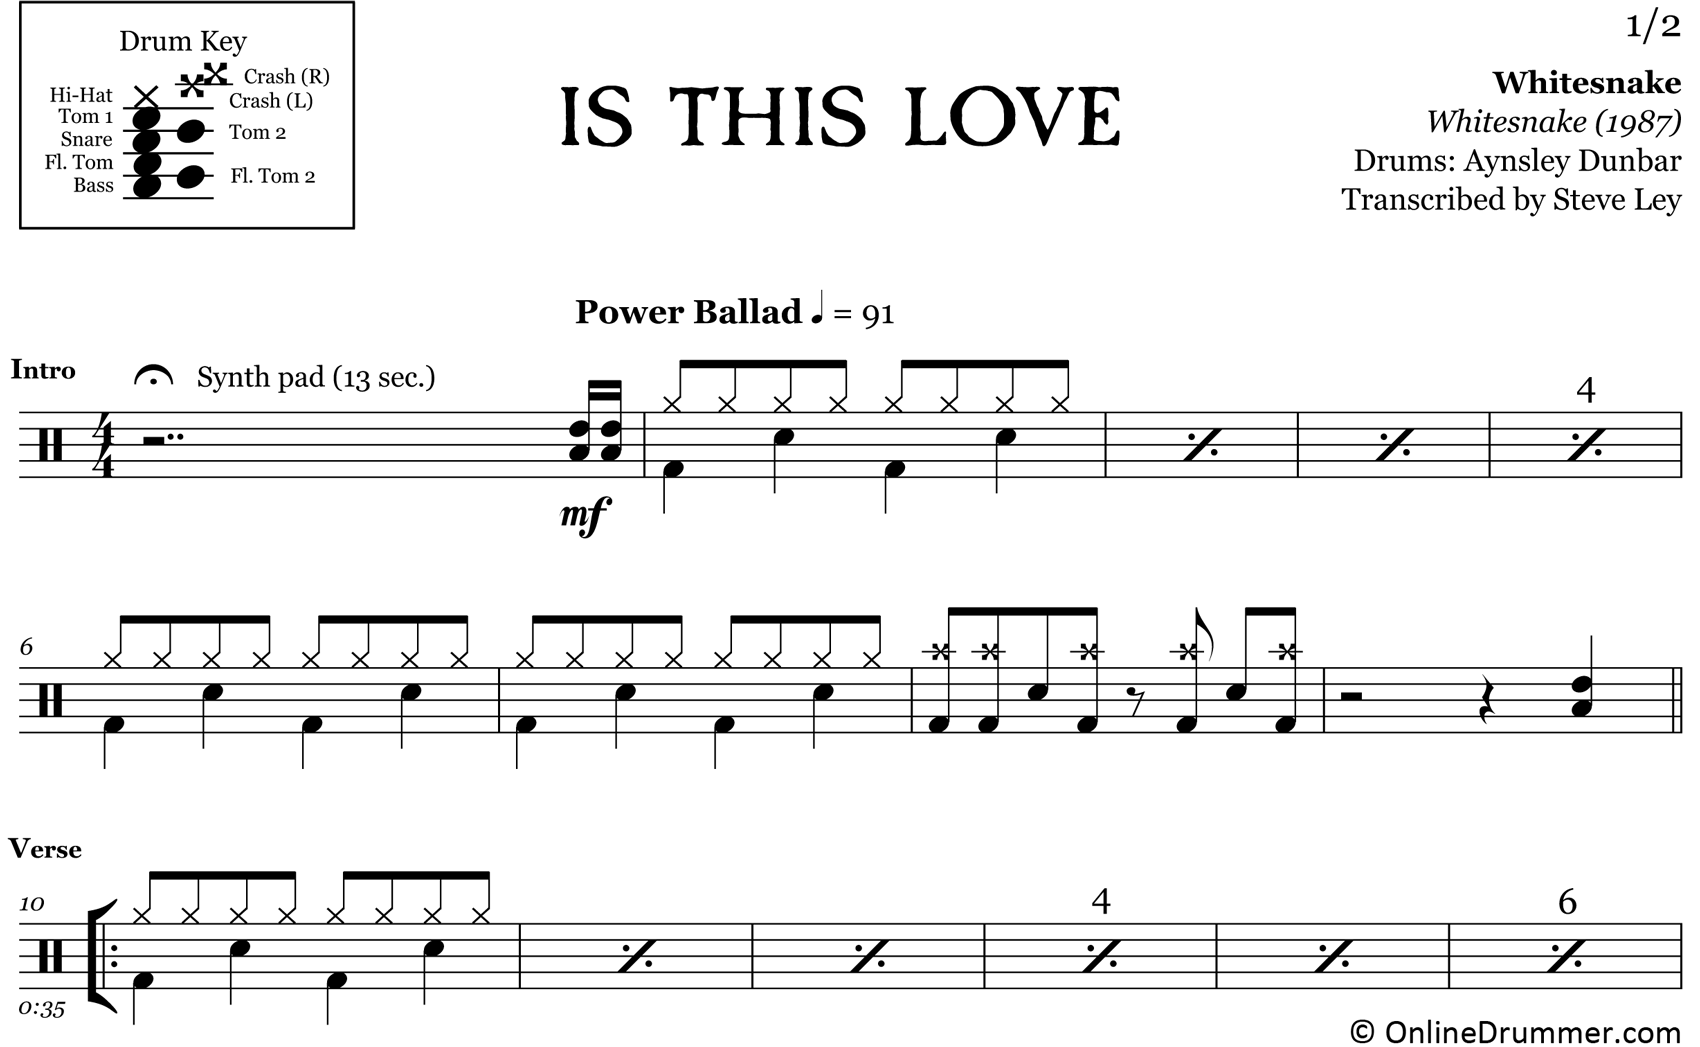 Is This Love - Whitesnake - Drum Sheet Music